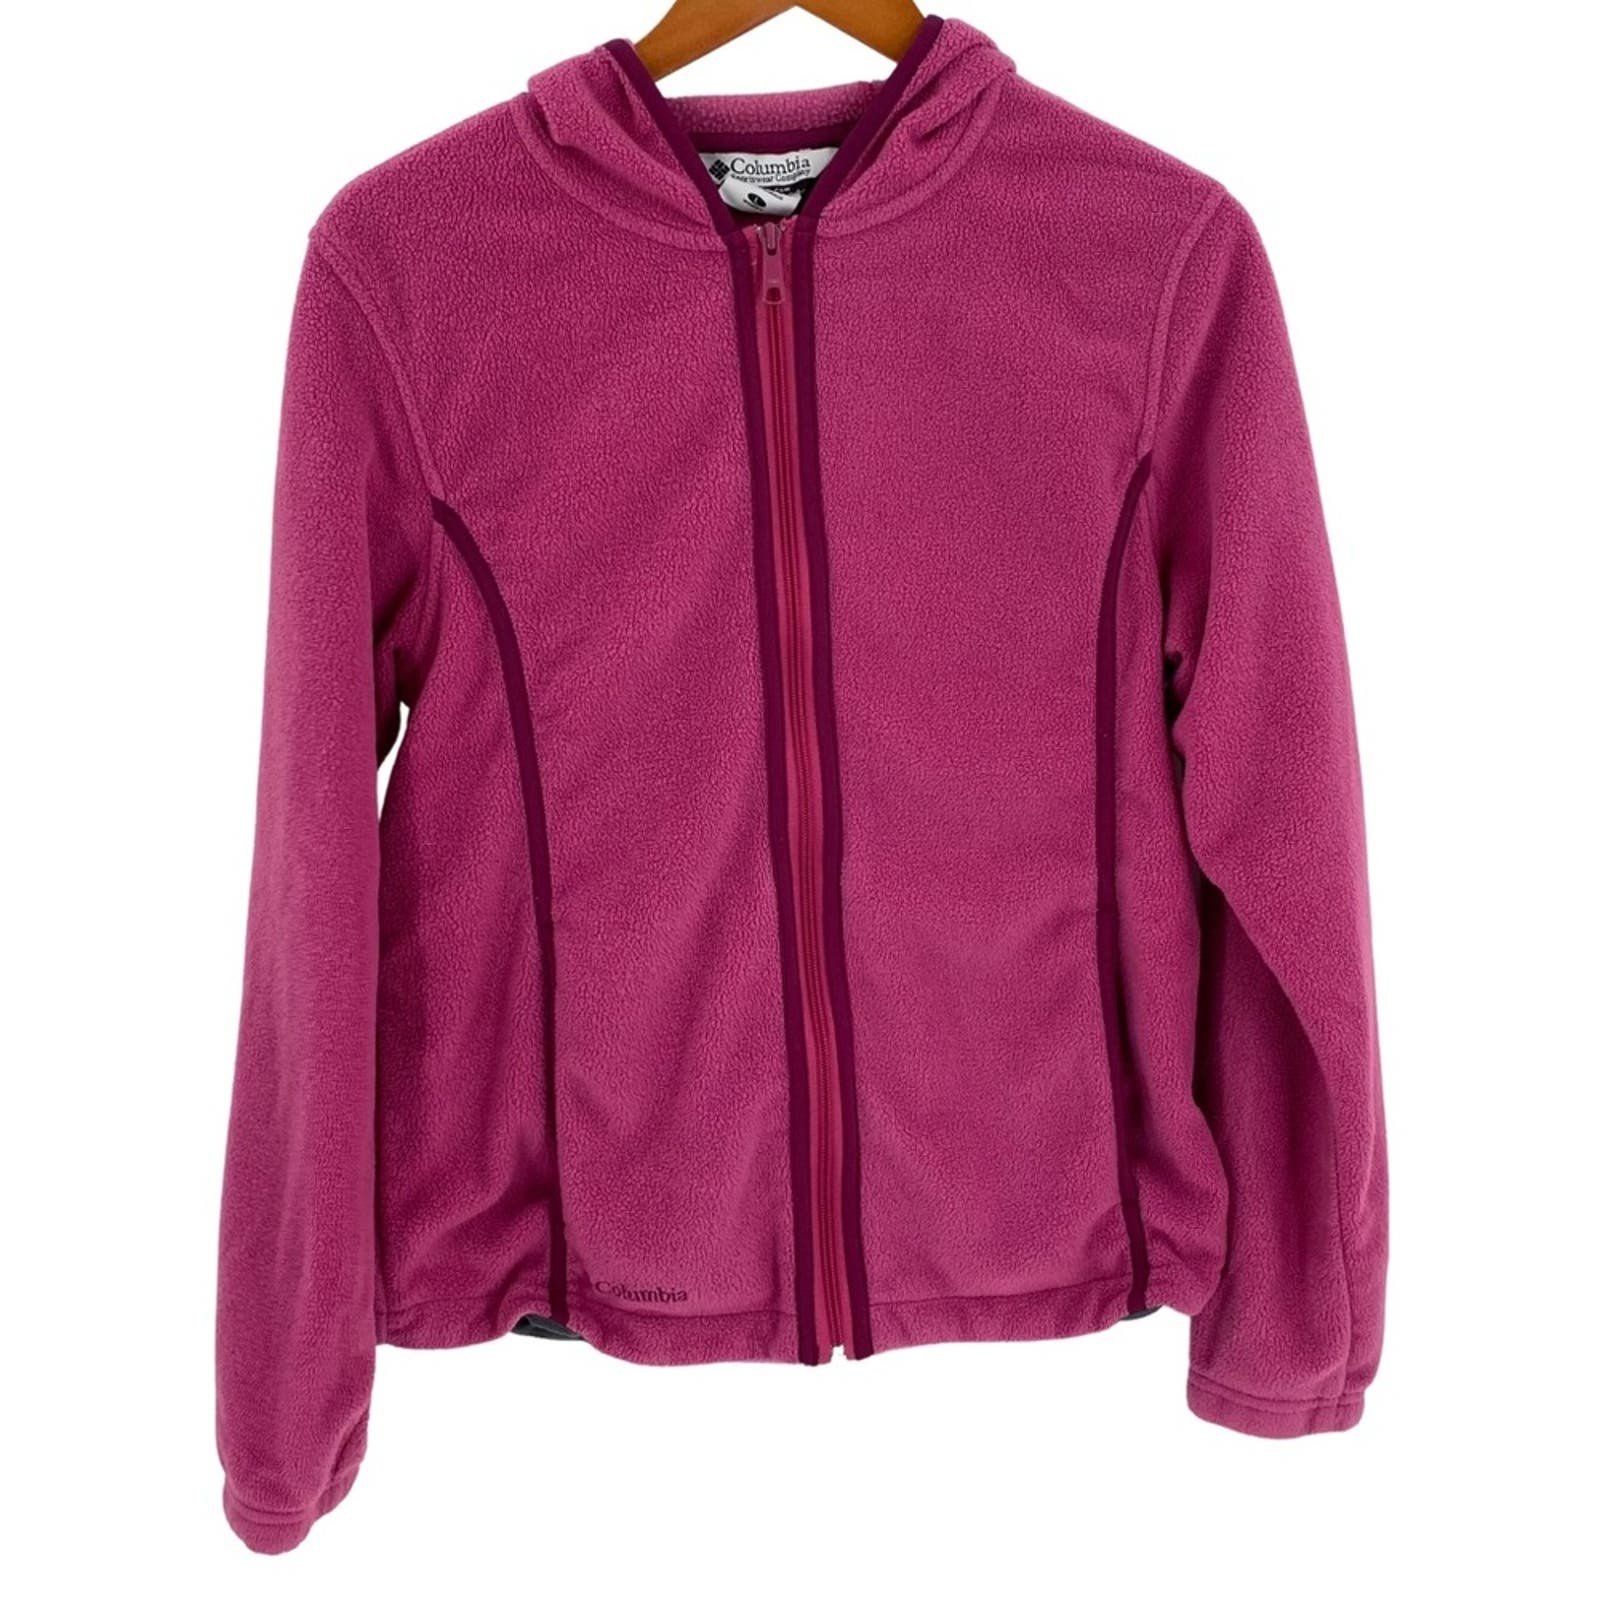 SALE: Berry pink Columbia womens fleece sweatshirt hoodie fill zip up size large aNCmRK67k